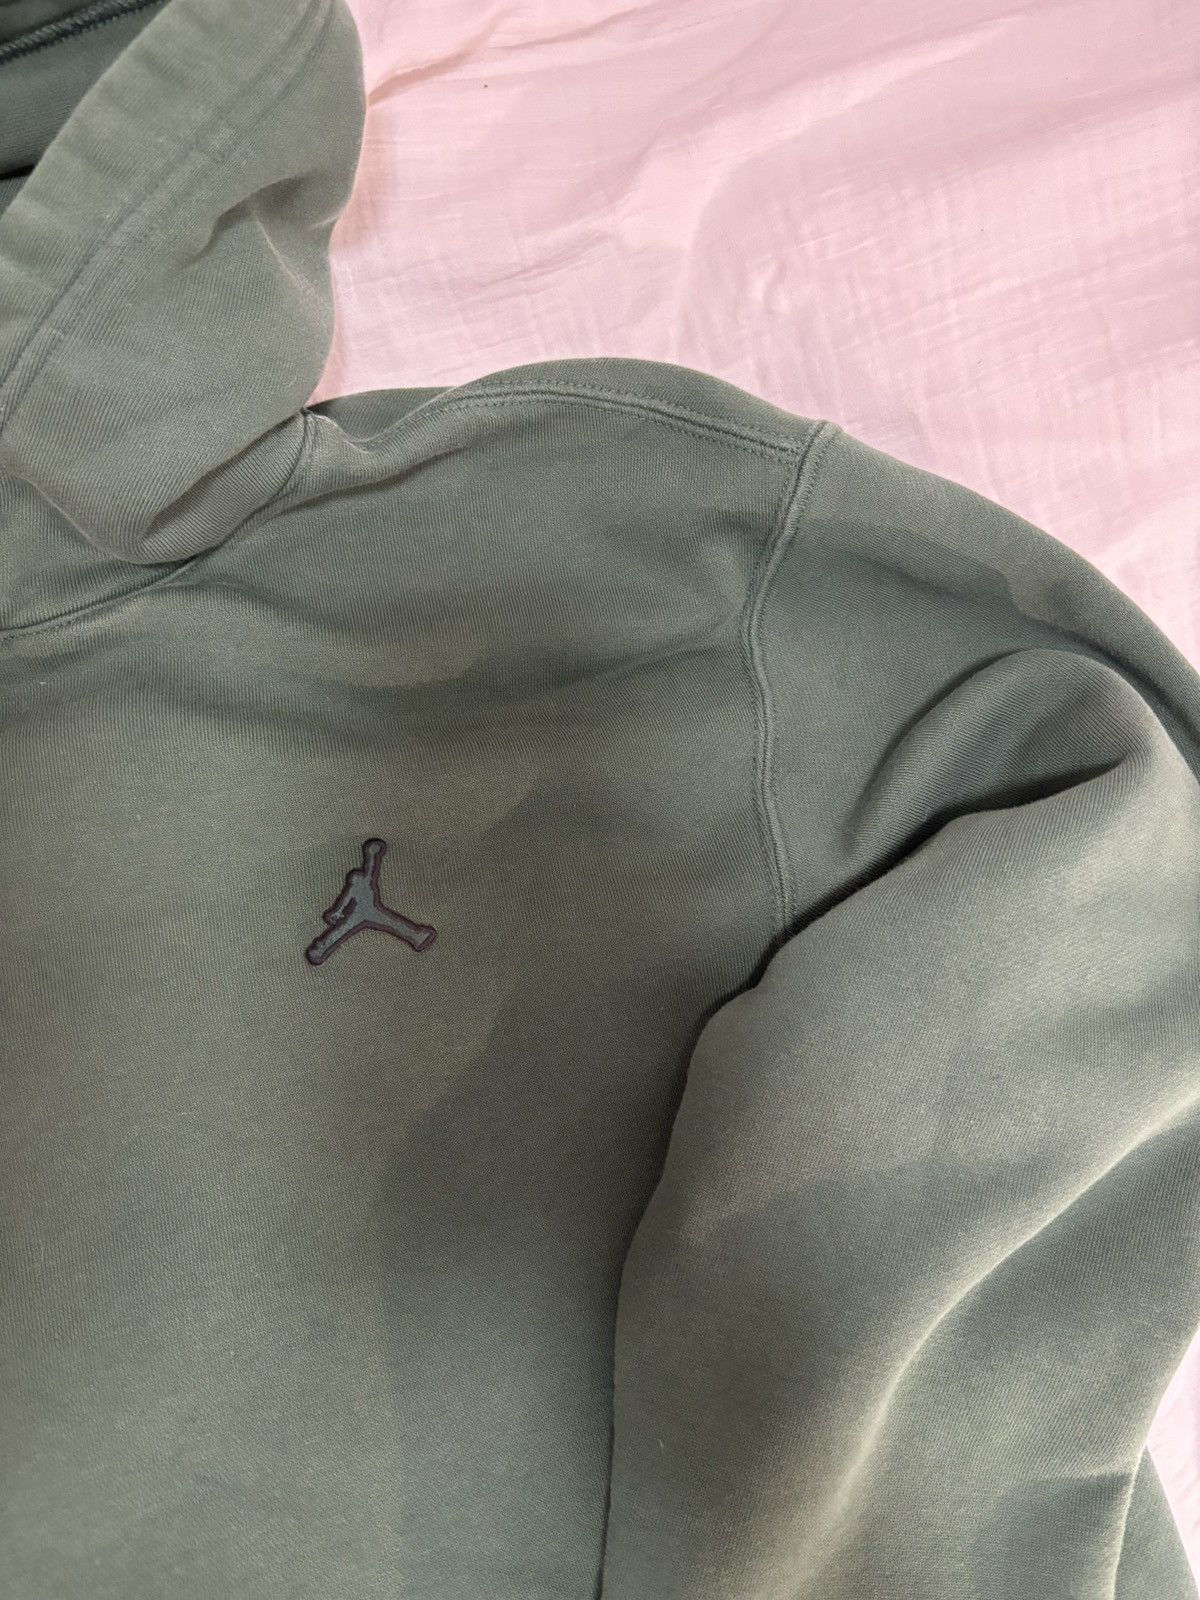 Jordan Brand Jordan Sweatshirt Size US S / EU 44-46 / 1 - 2 Preview